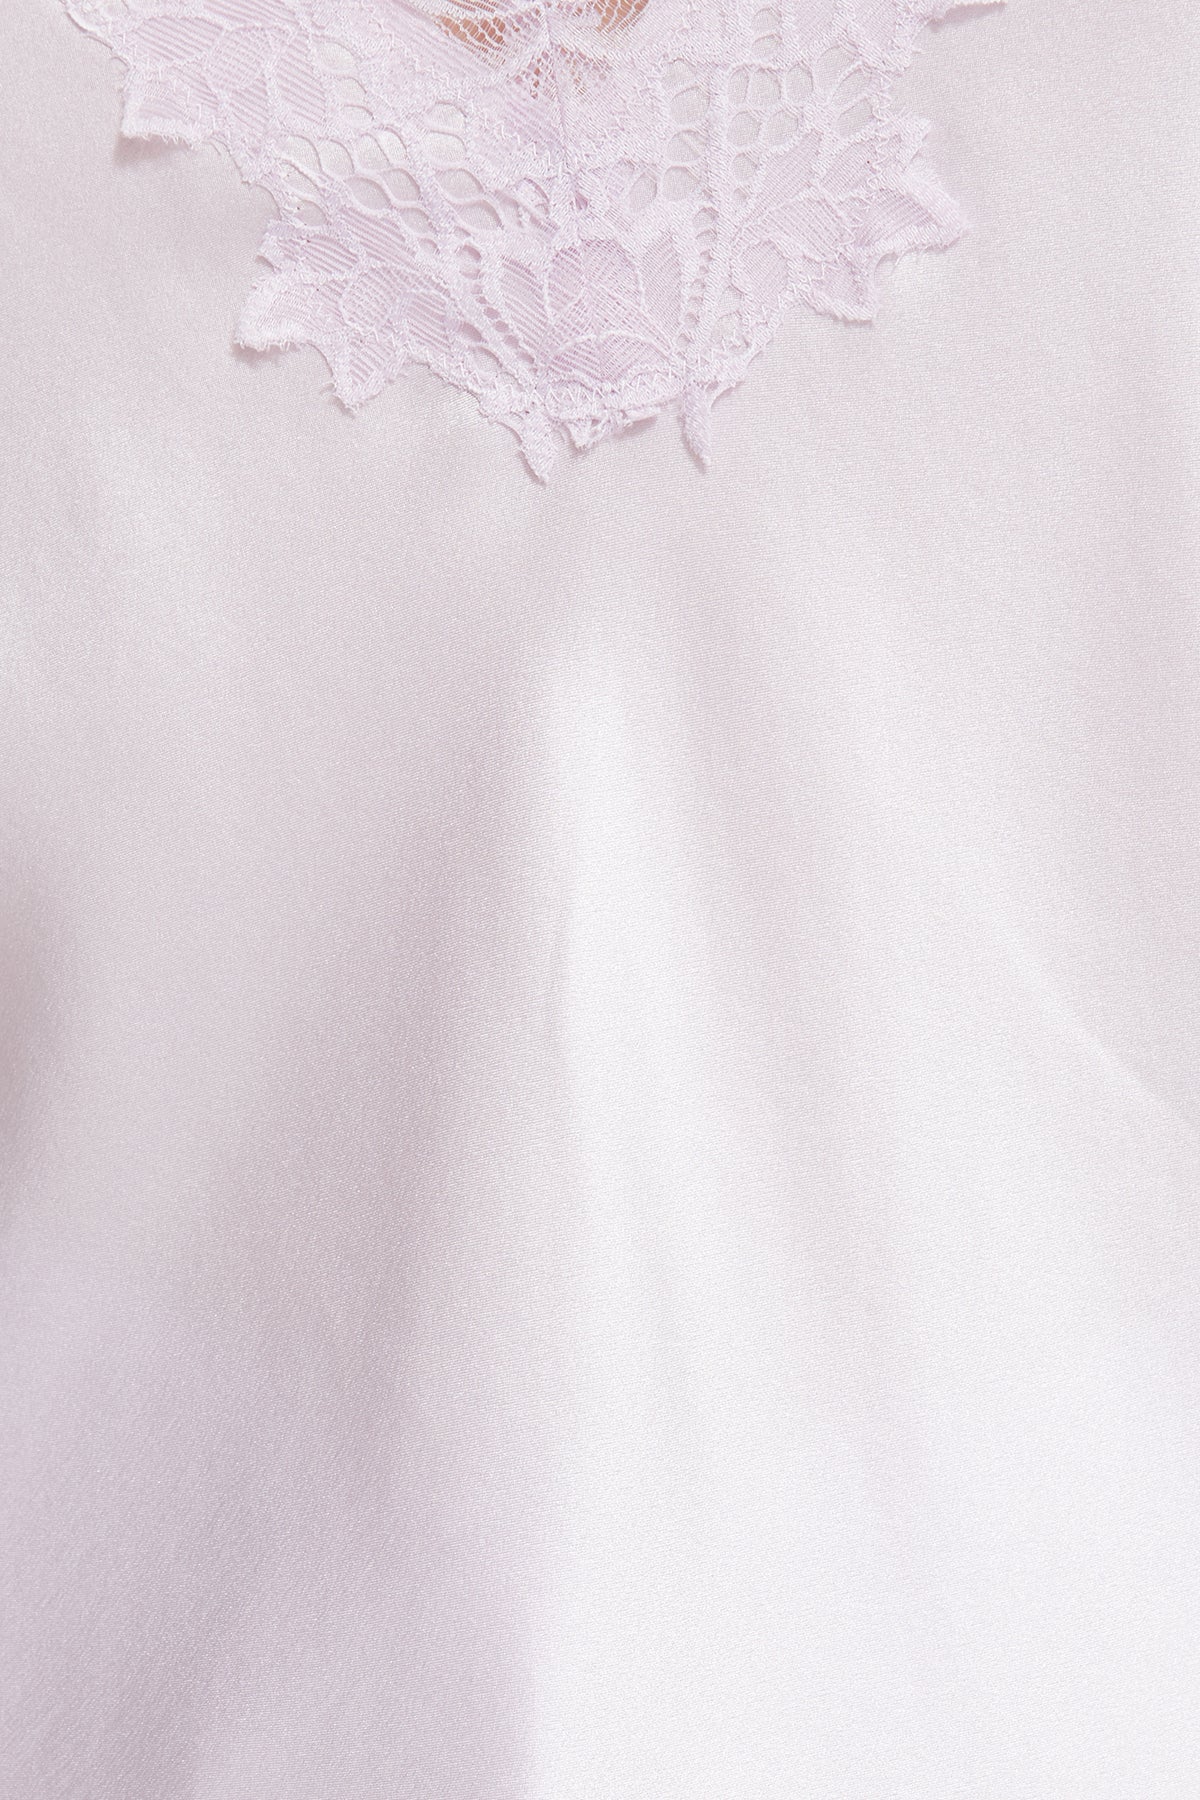 The Silk Cami in Soft Lilac - 100% Silk by Ginia